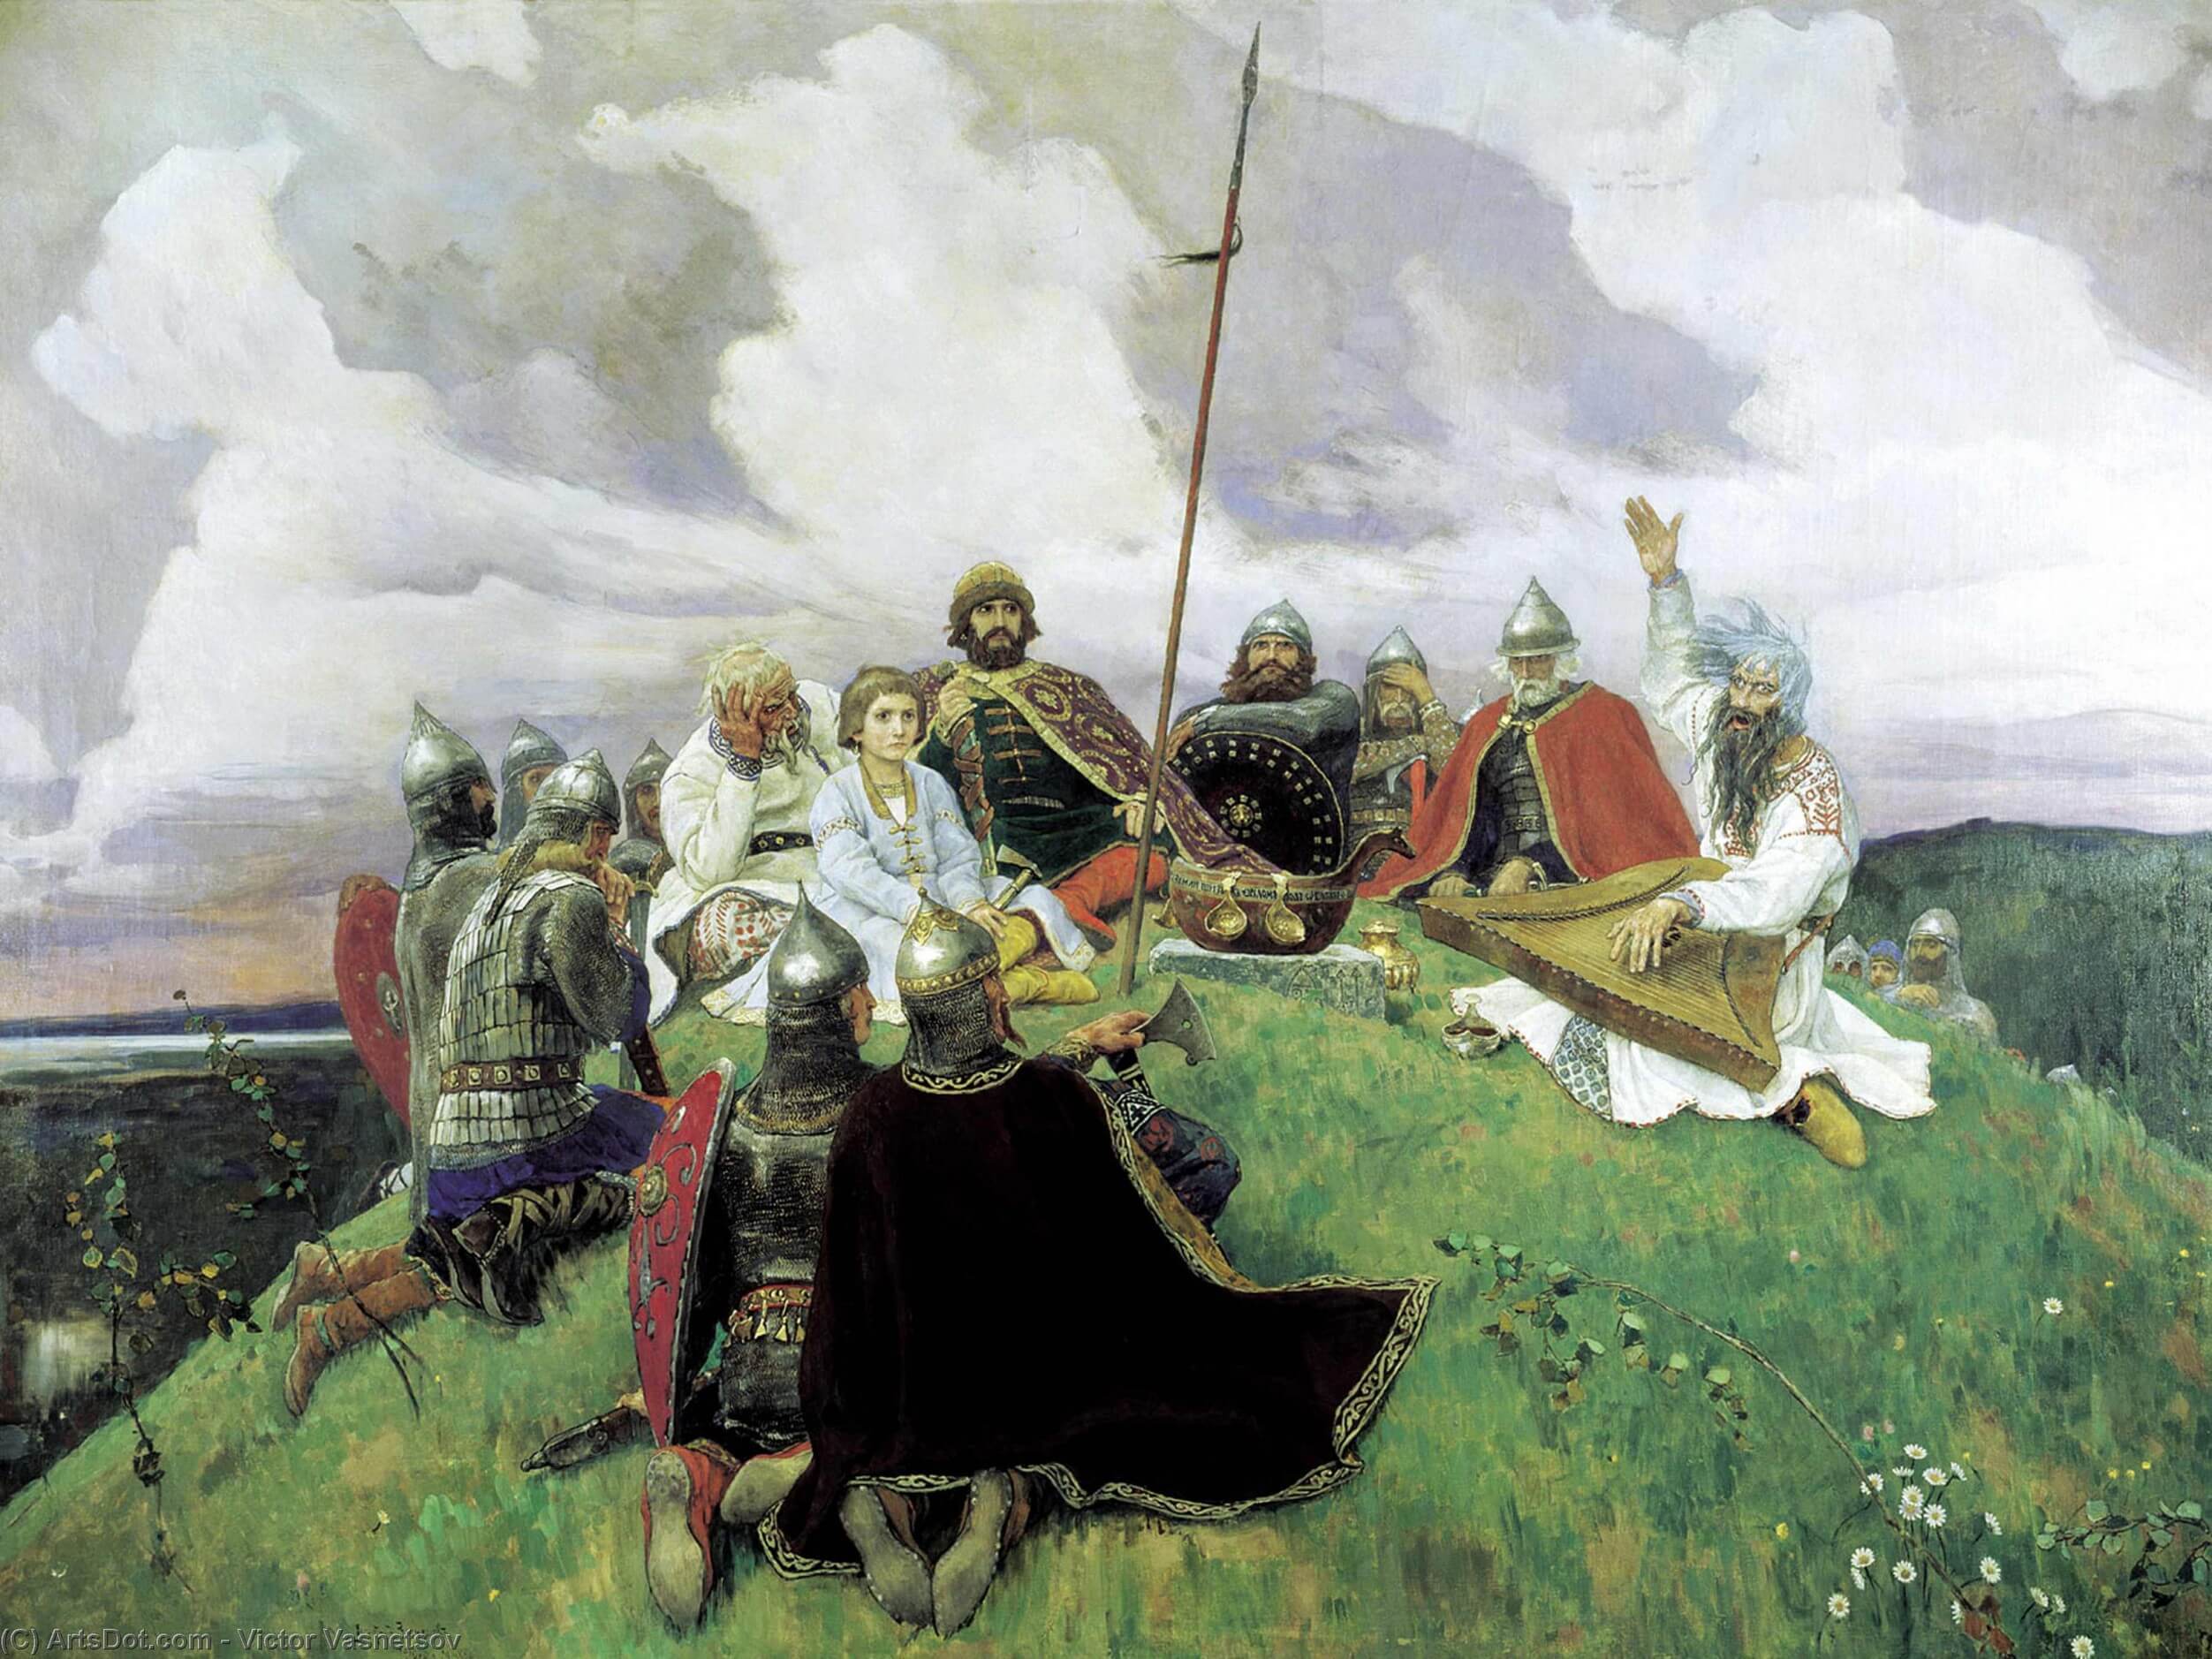 Картина «Баян», Виктора Васнецова — описание картины